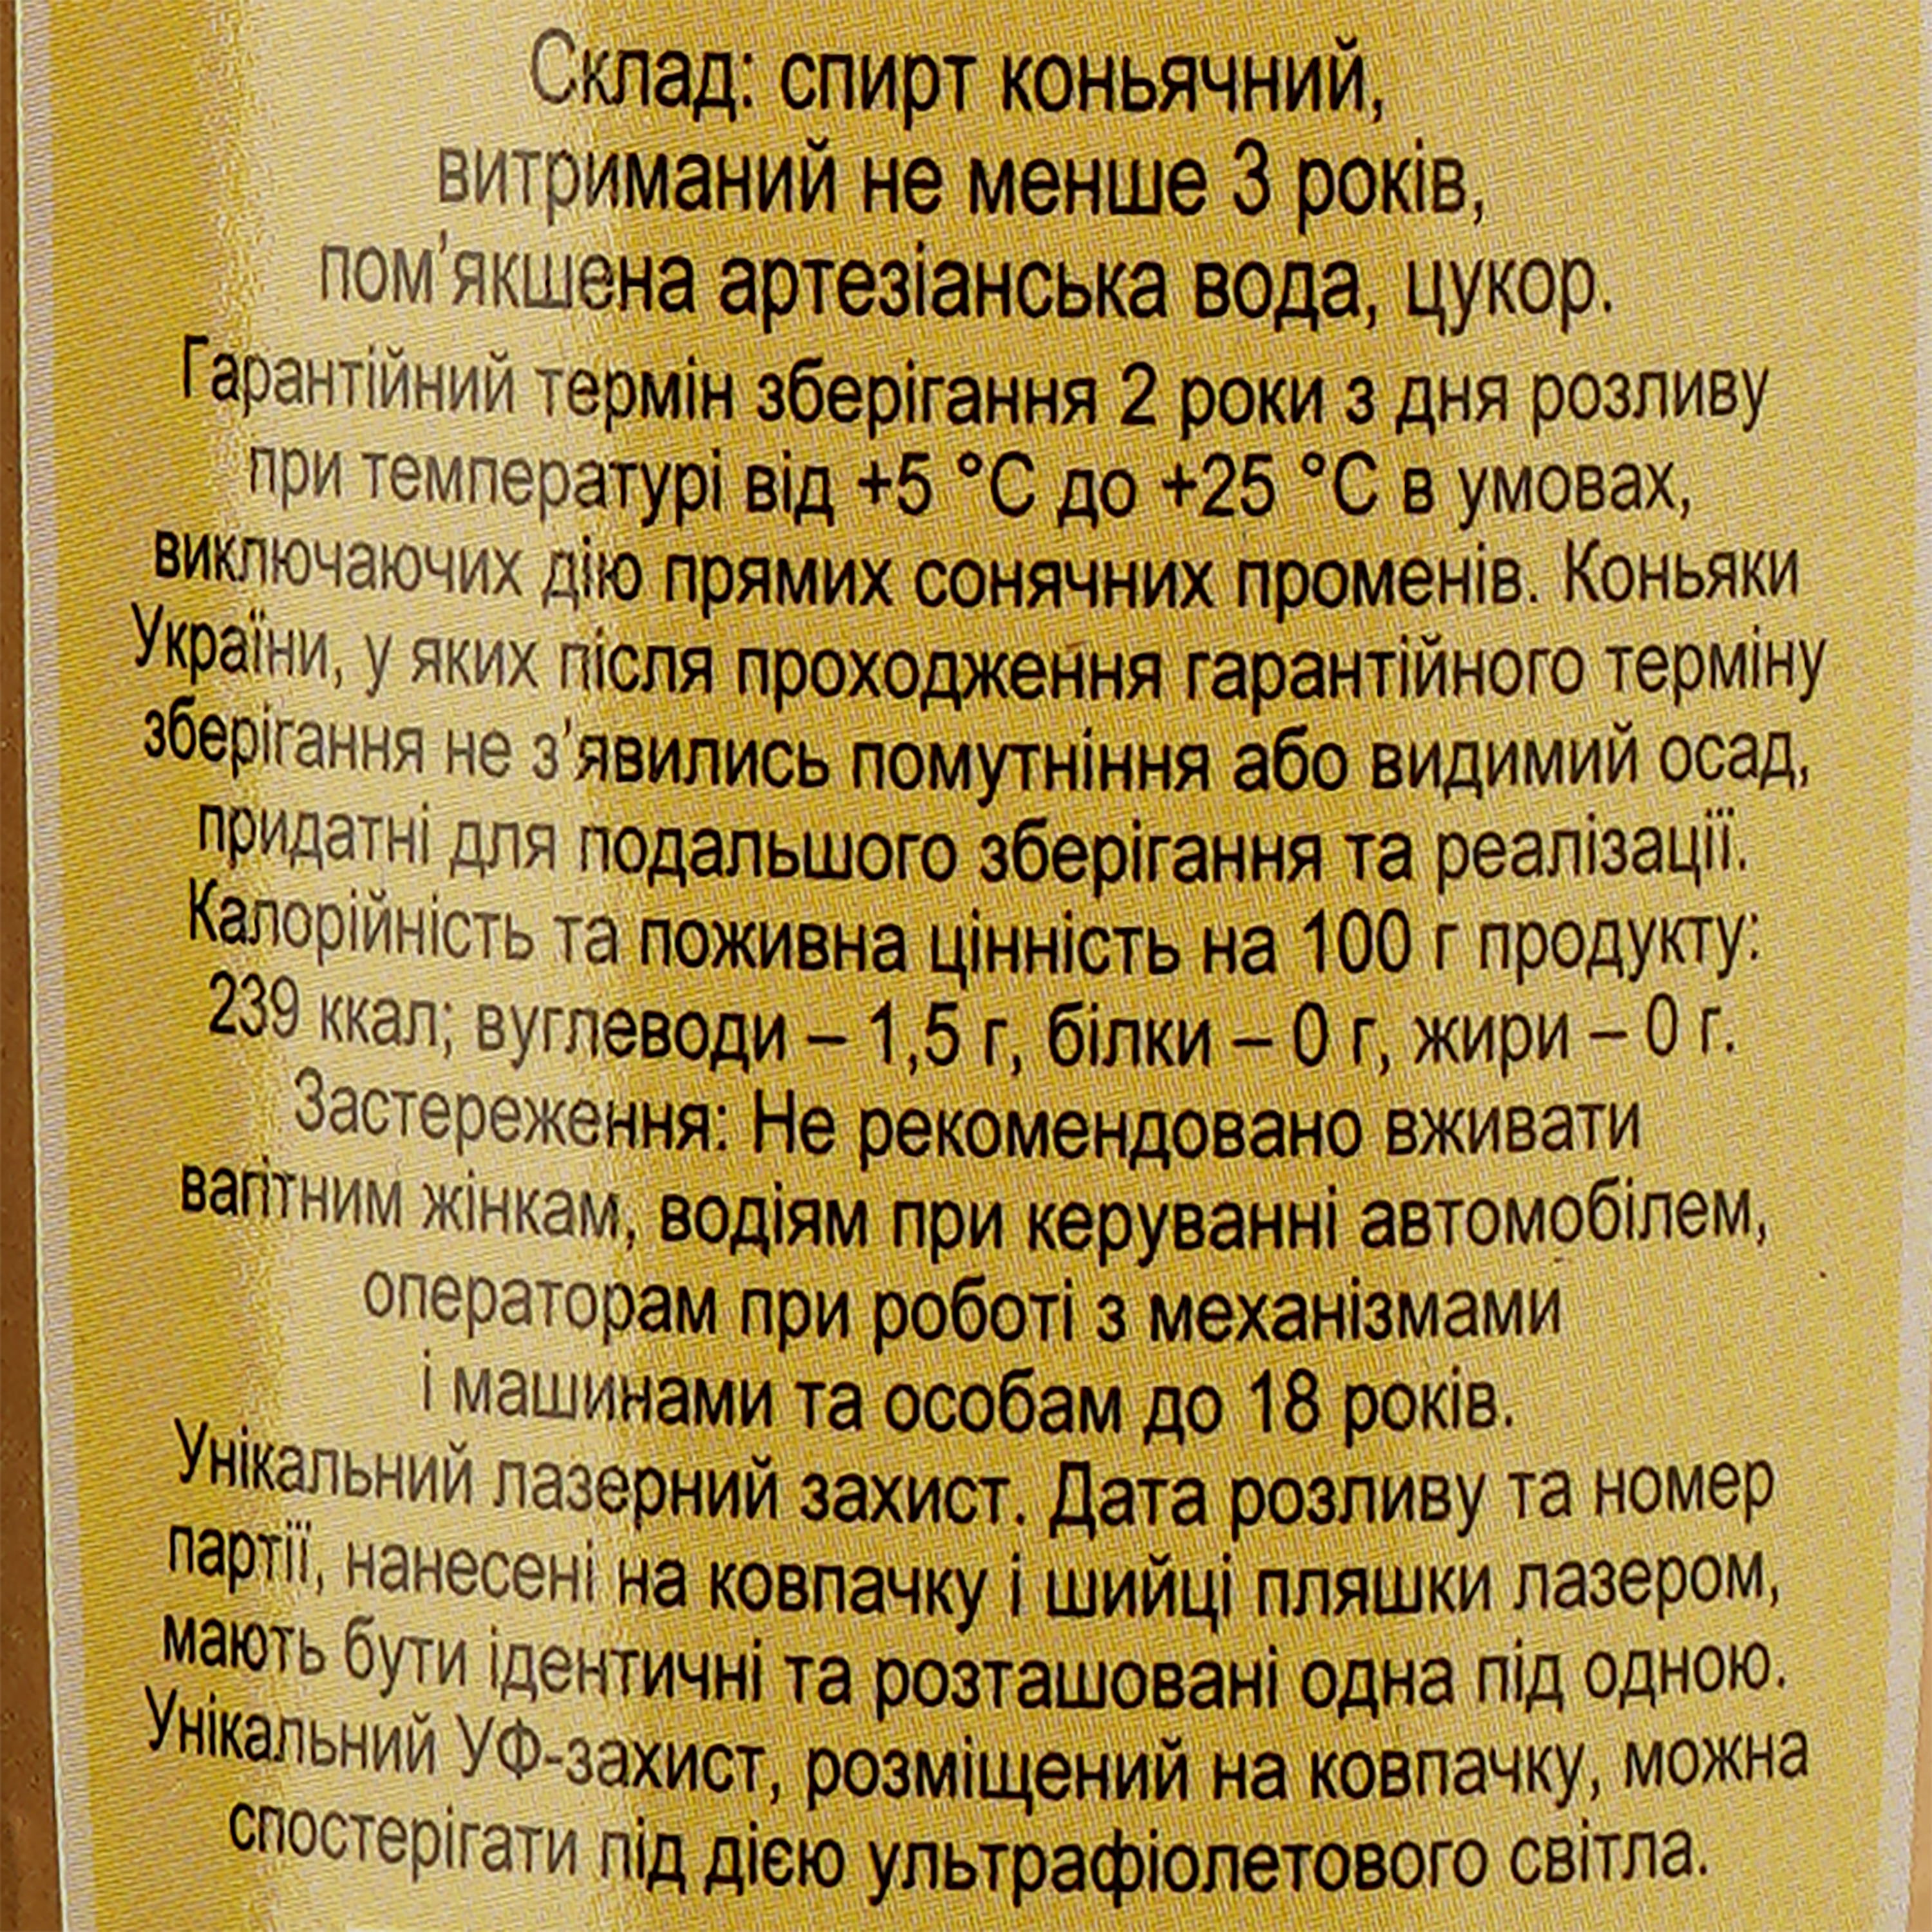 Коньяк Украины Тиса 3 звезды, 40%, 0,5 л (1422) - фото 3